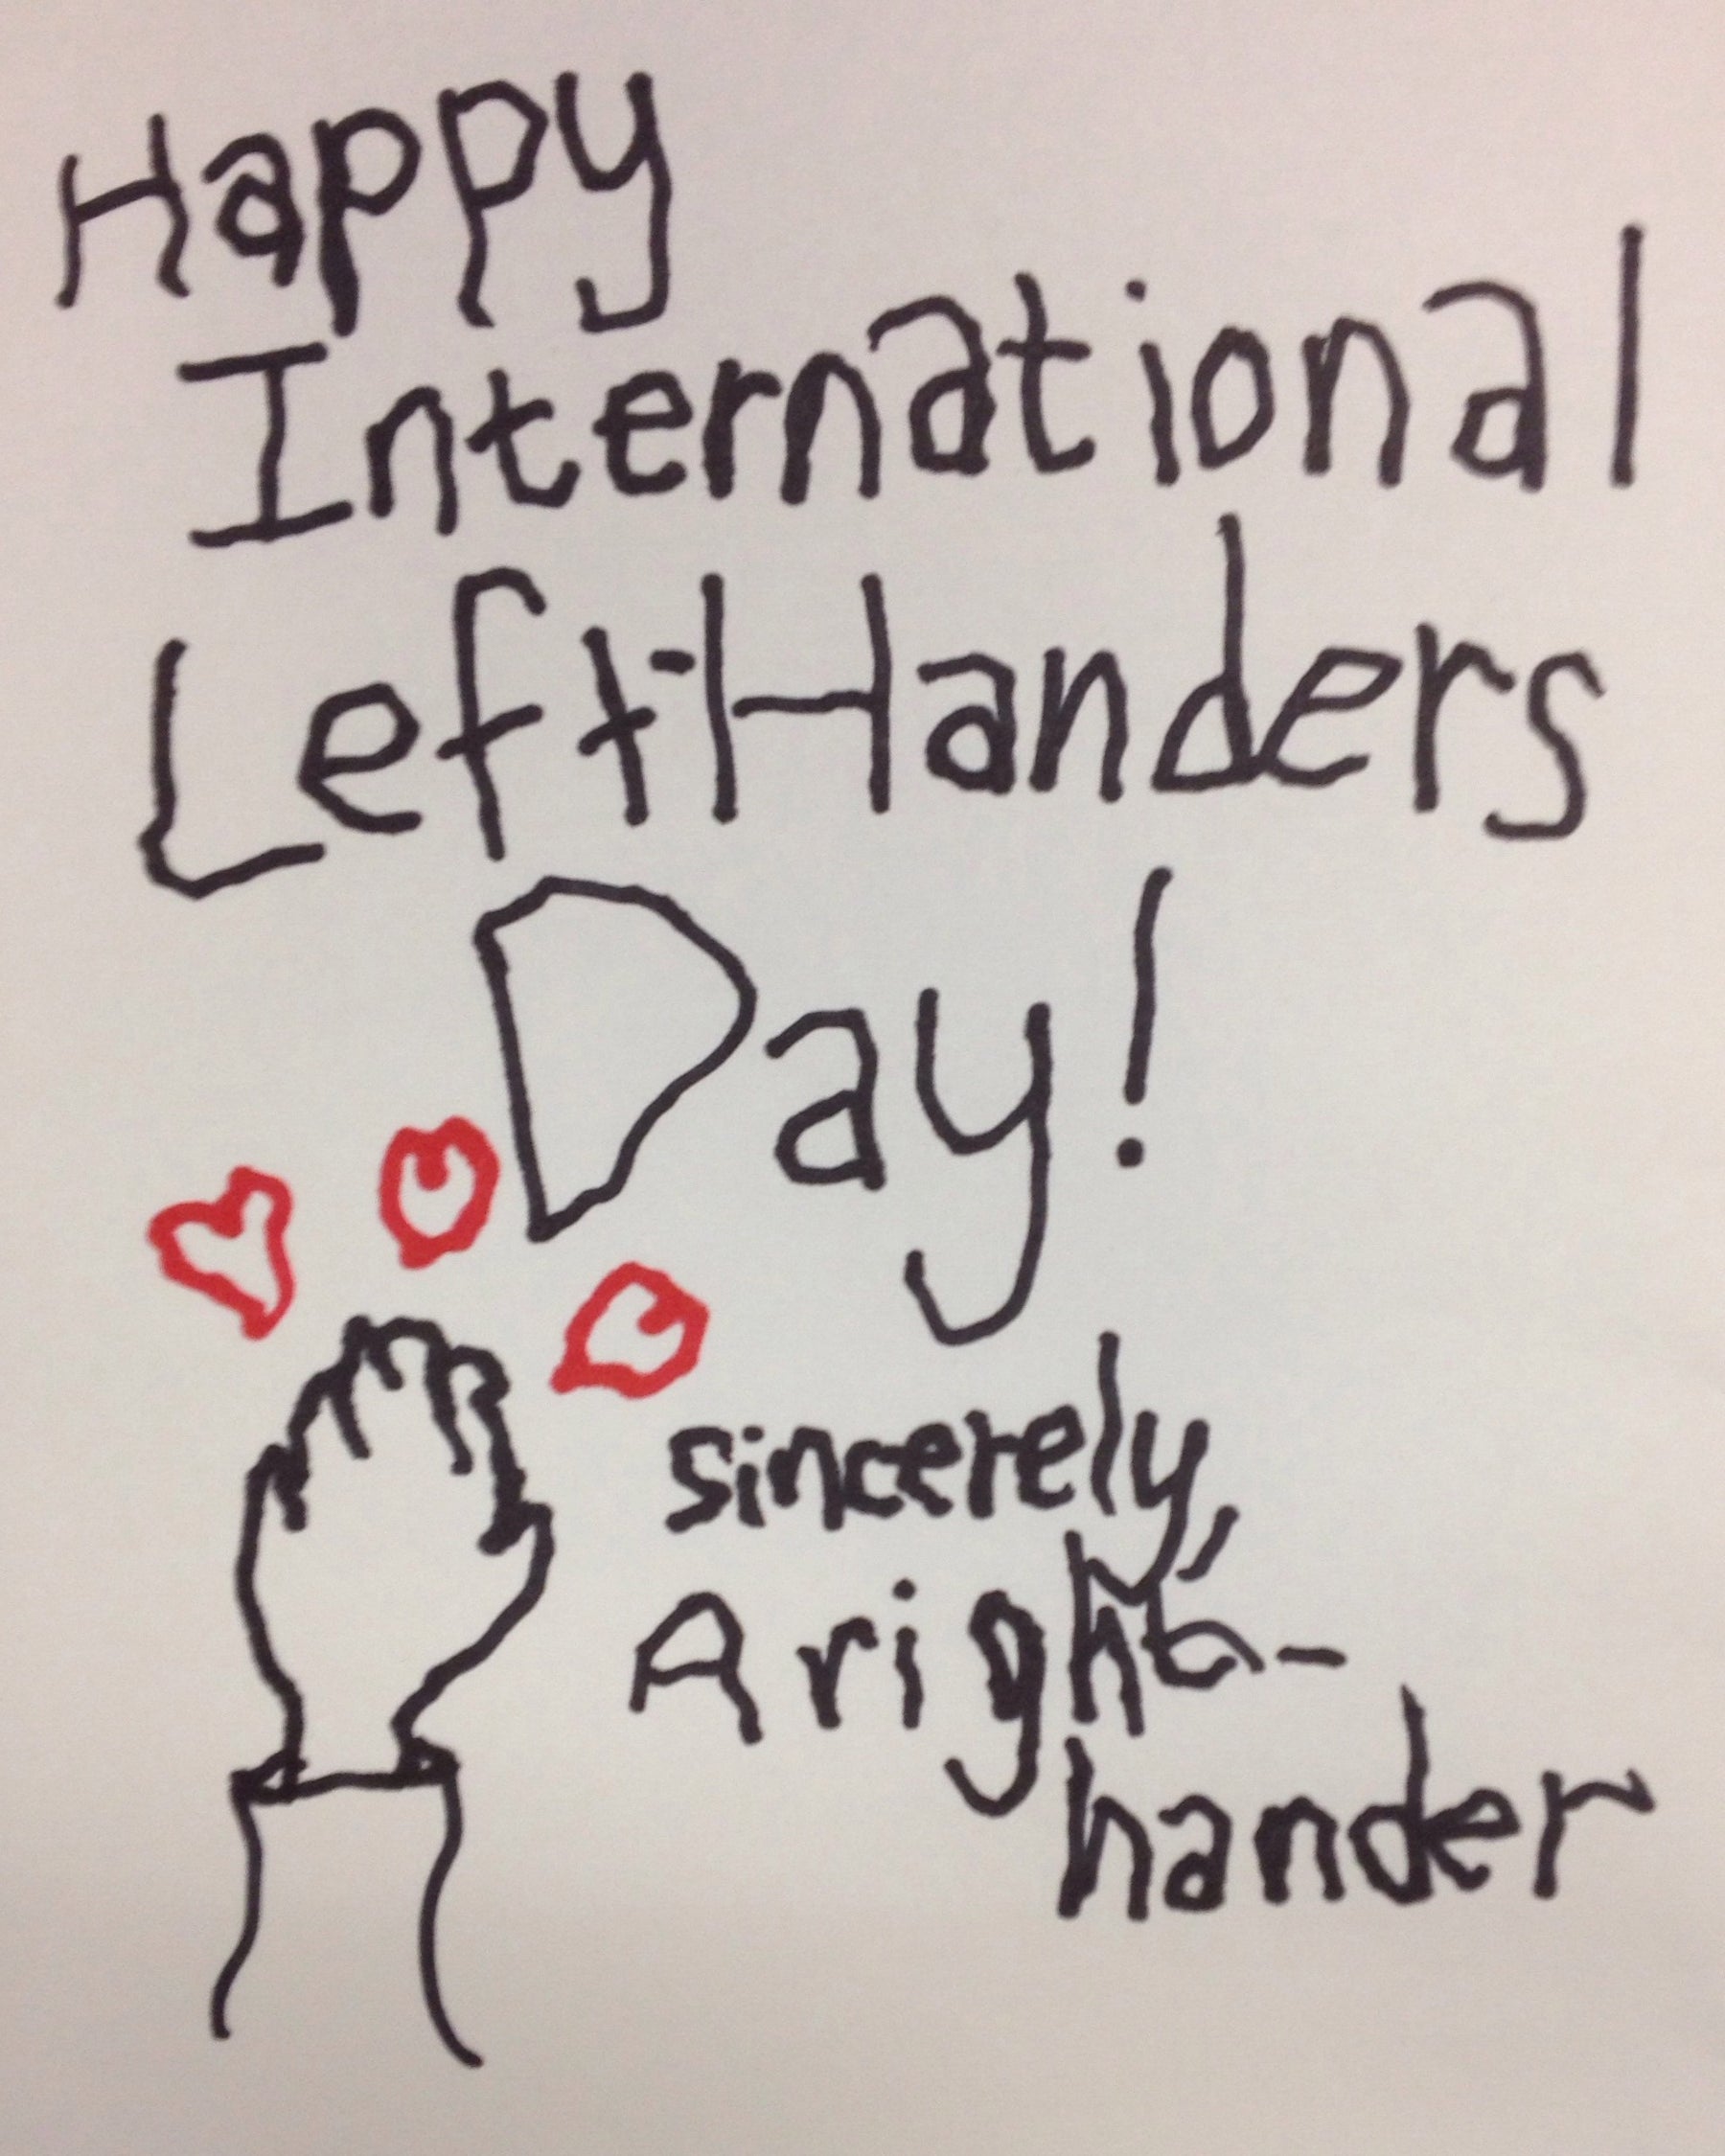 International Left Handers Day